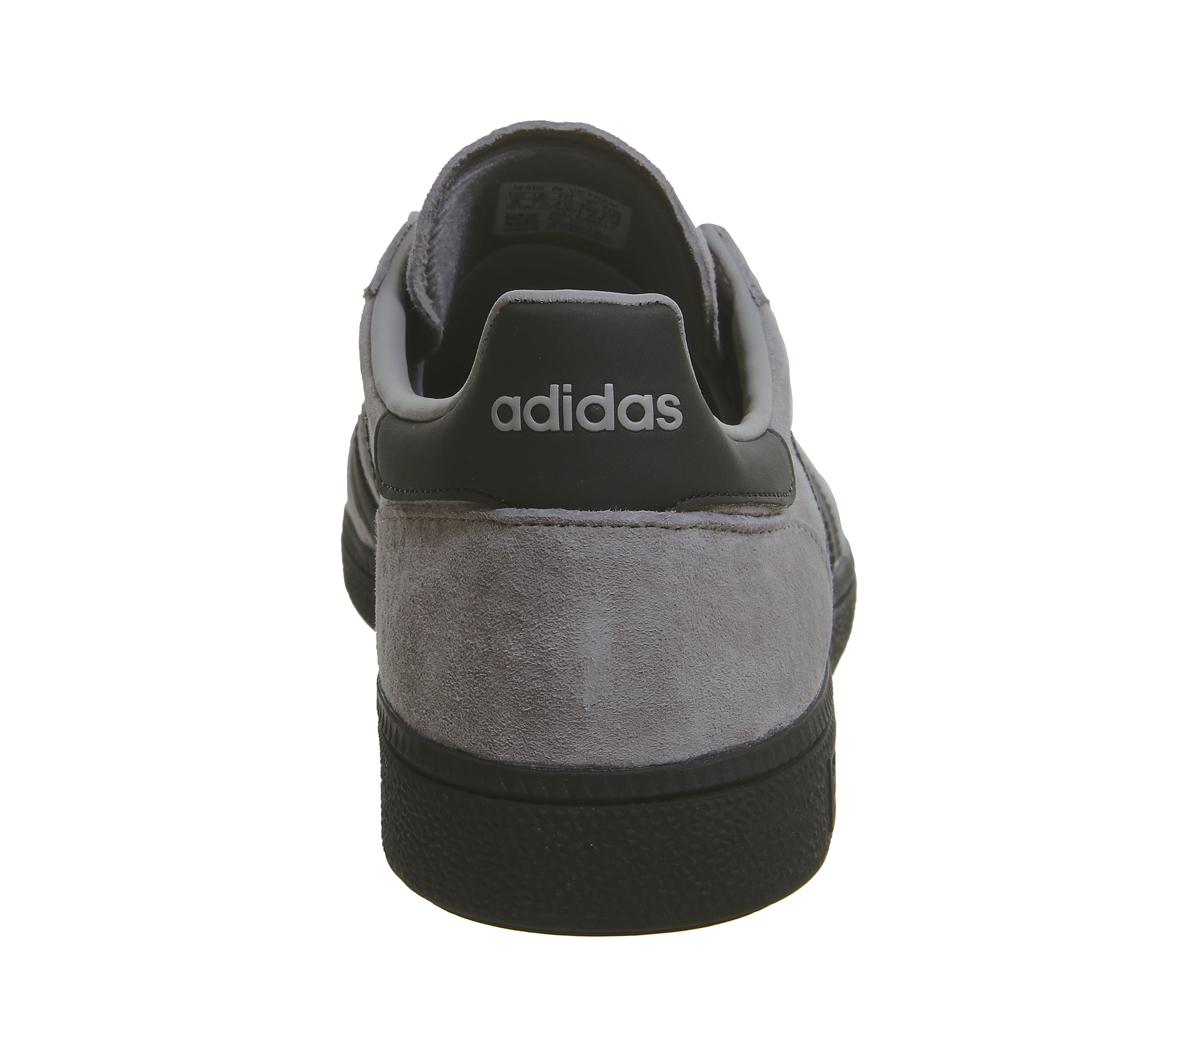 adidas spezial solid grey